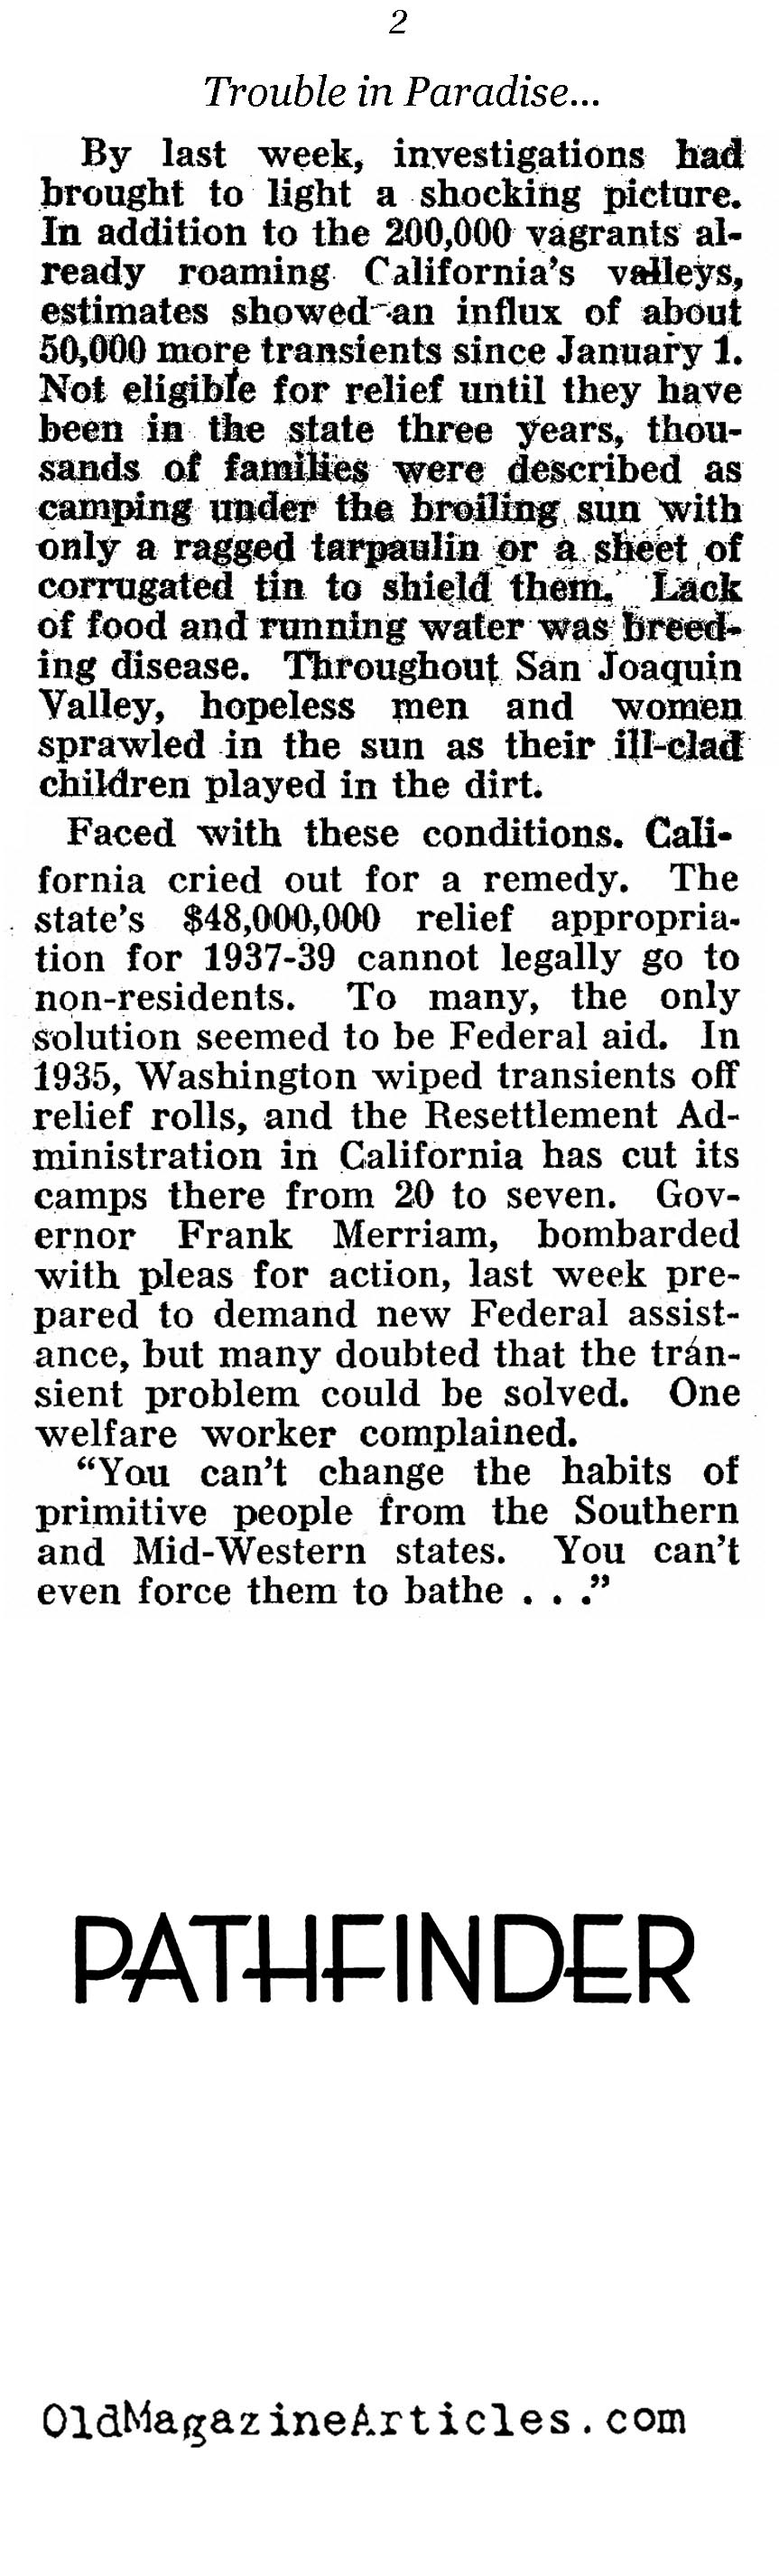 Starvation in the San Joaquin Valley (Pathfinder Magazine, 1937)